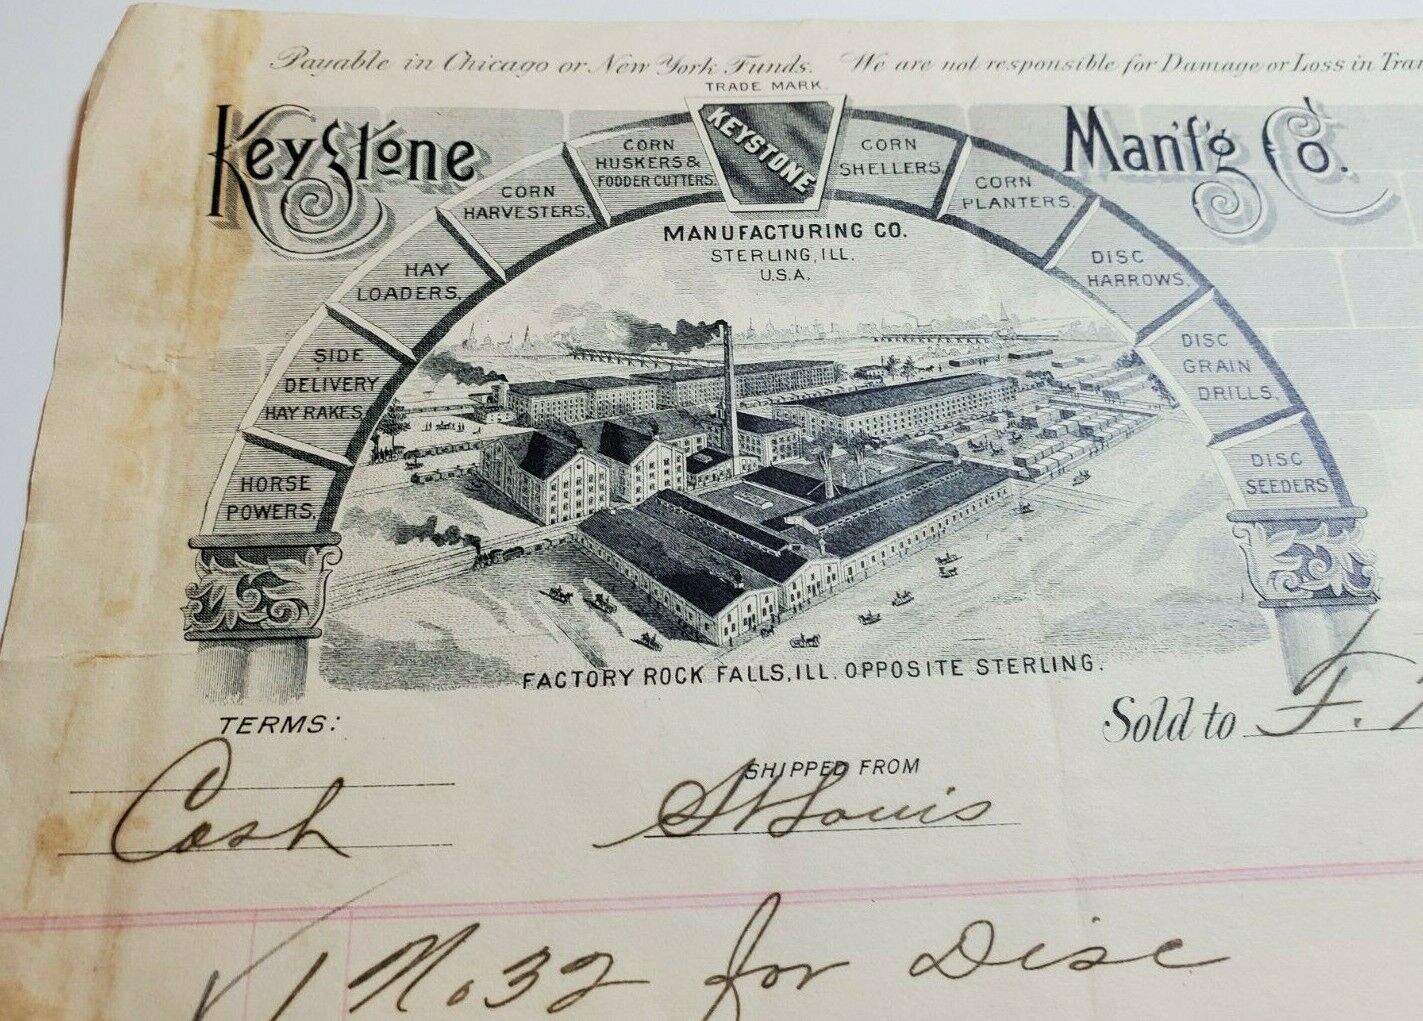  FARM IMPLEMENTS LETTERHEAD BILLHEAD 1894. KEYSTONE MANUFACTURING CO